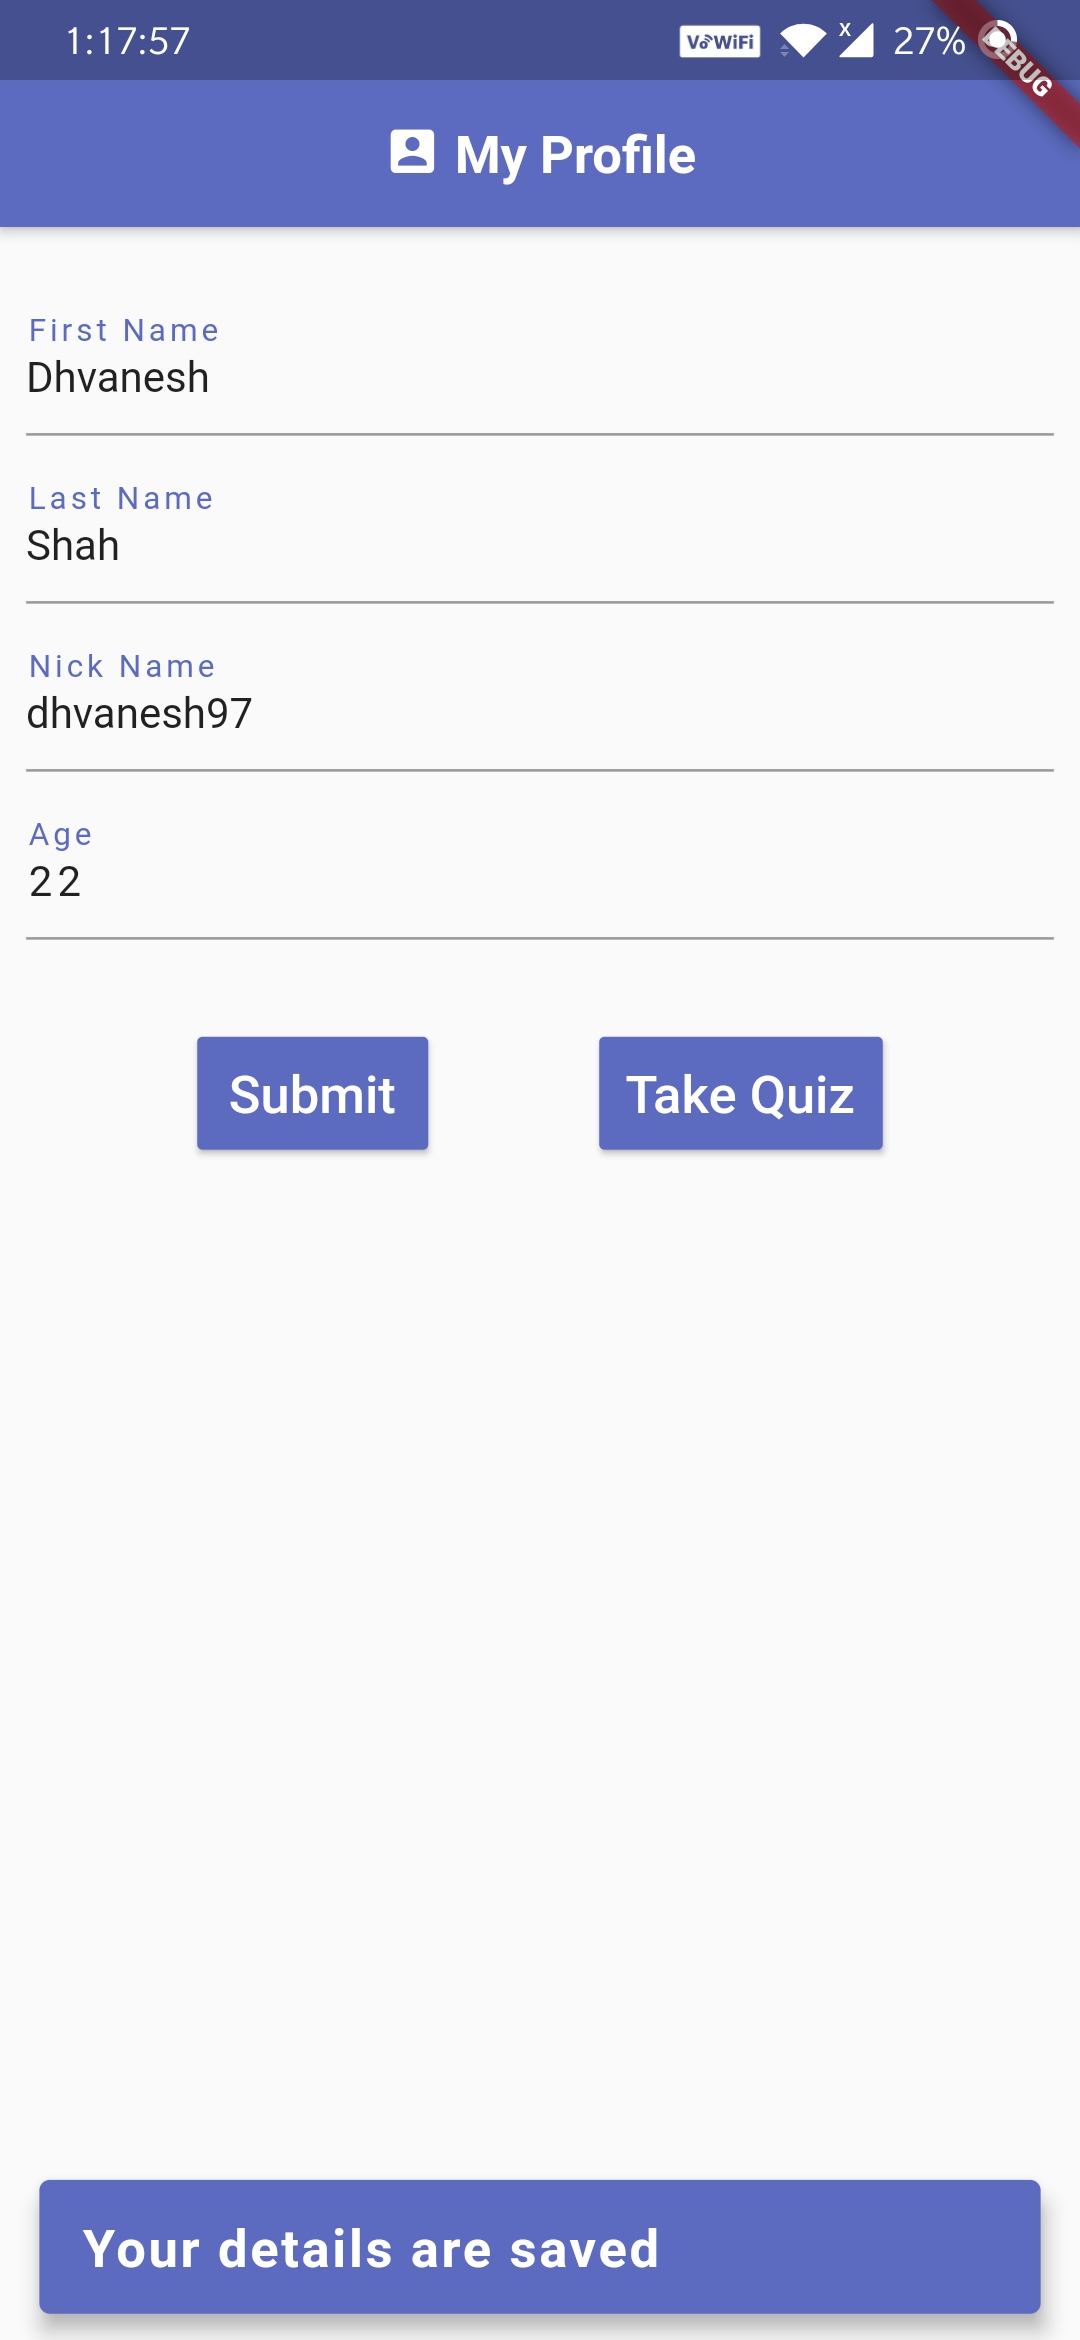 A simple yet elegant quiz app developed with Flutter